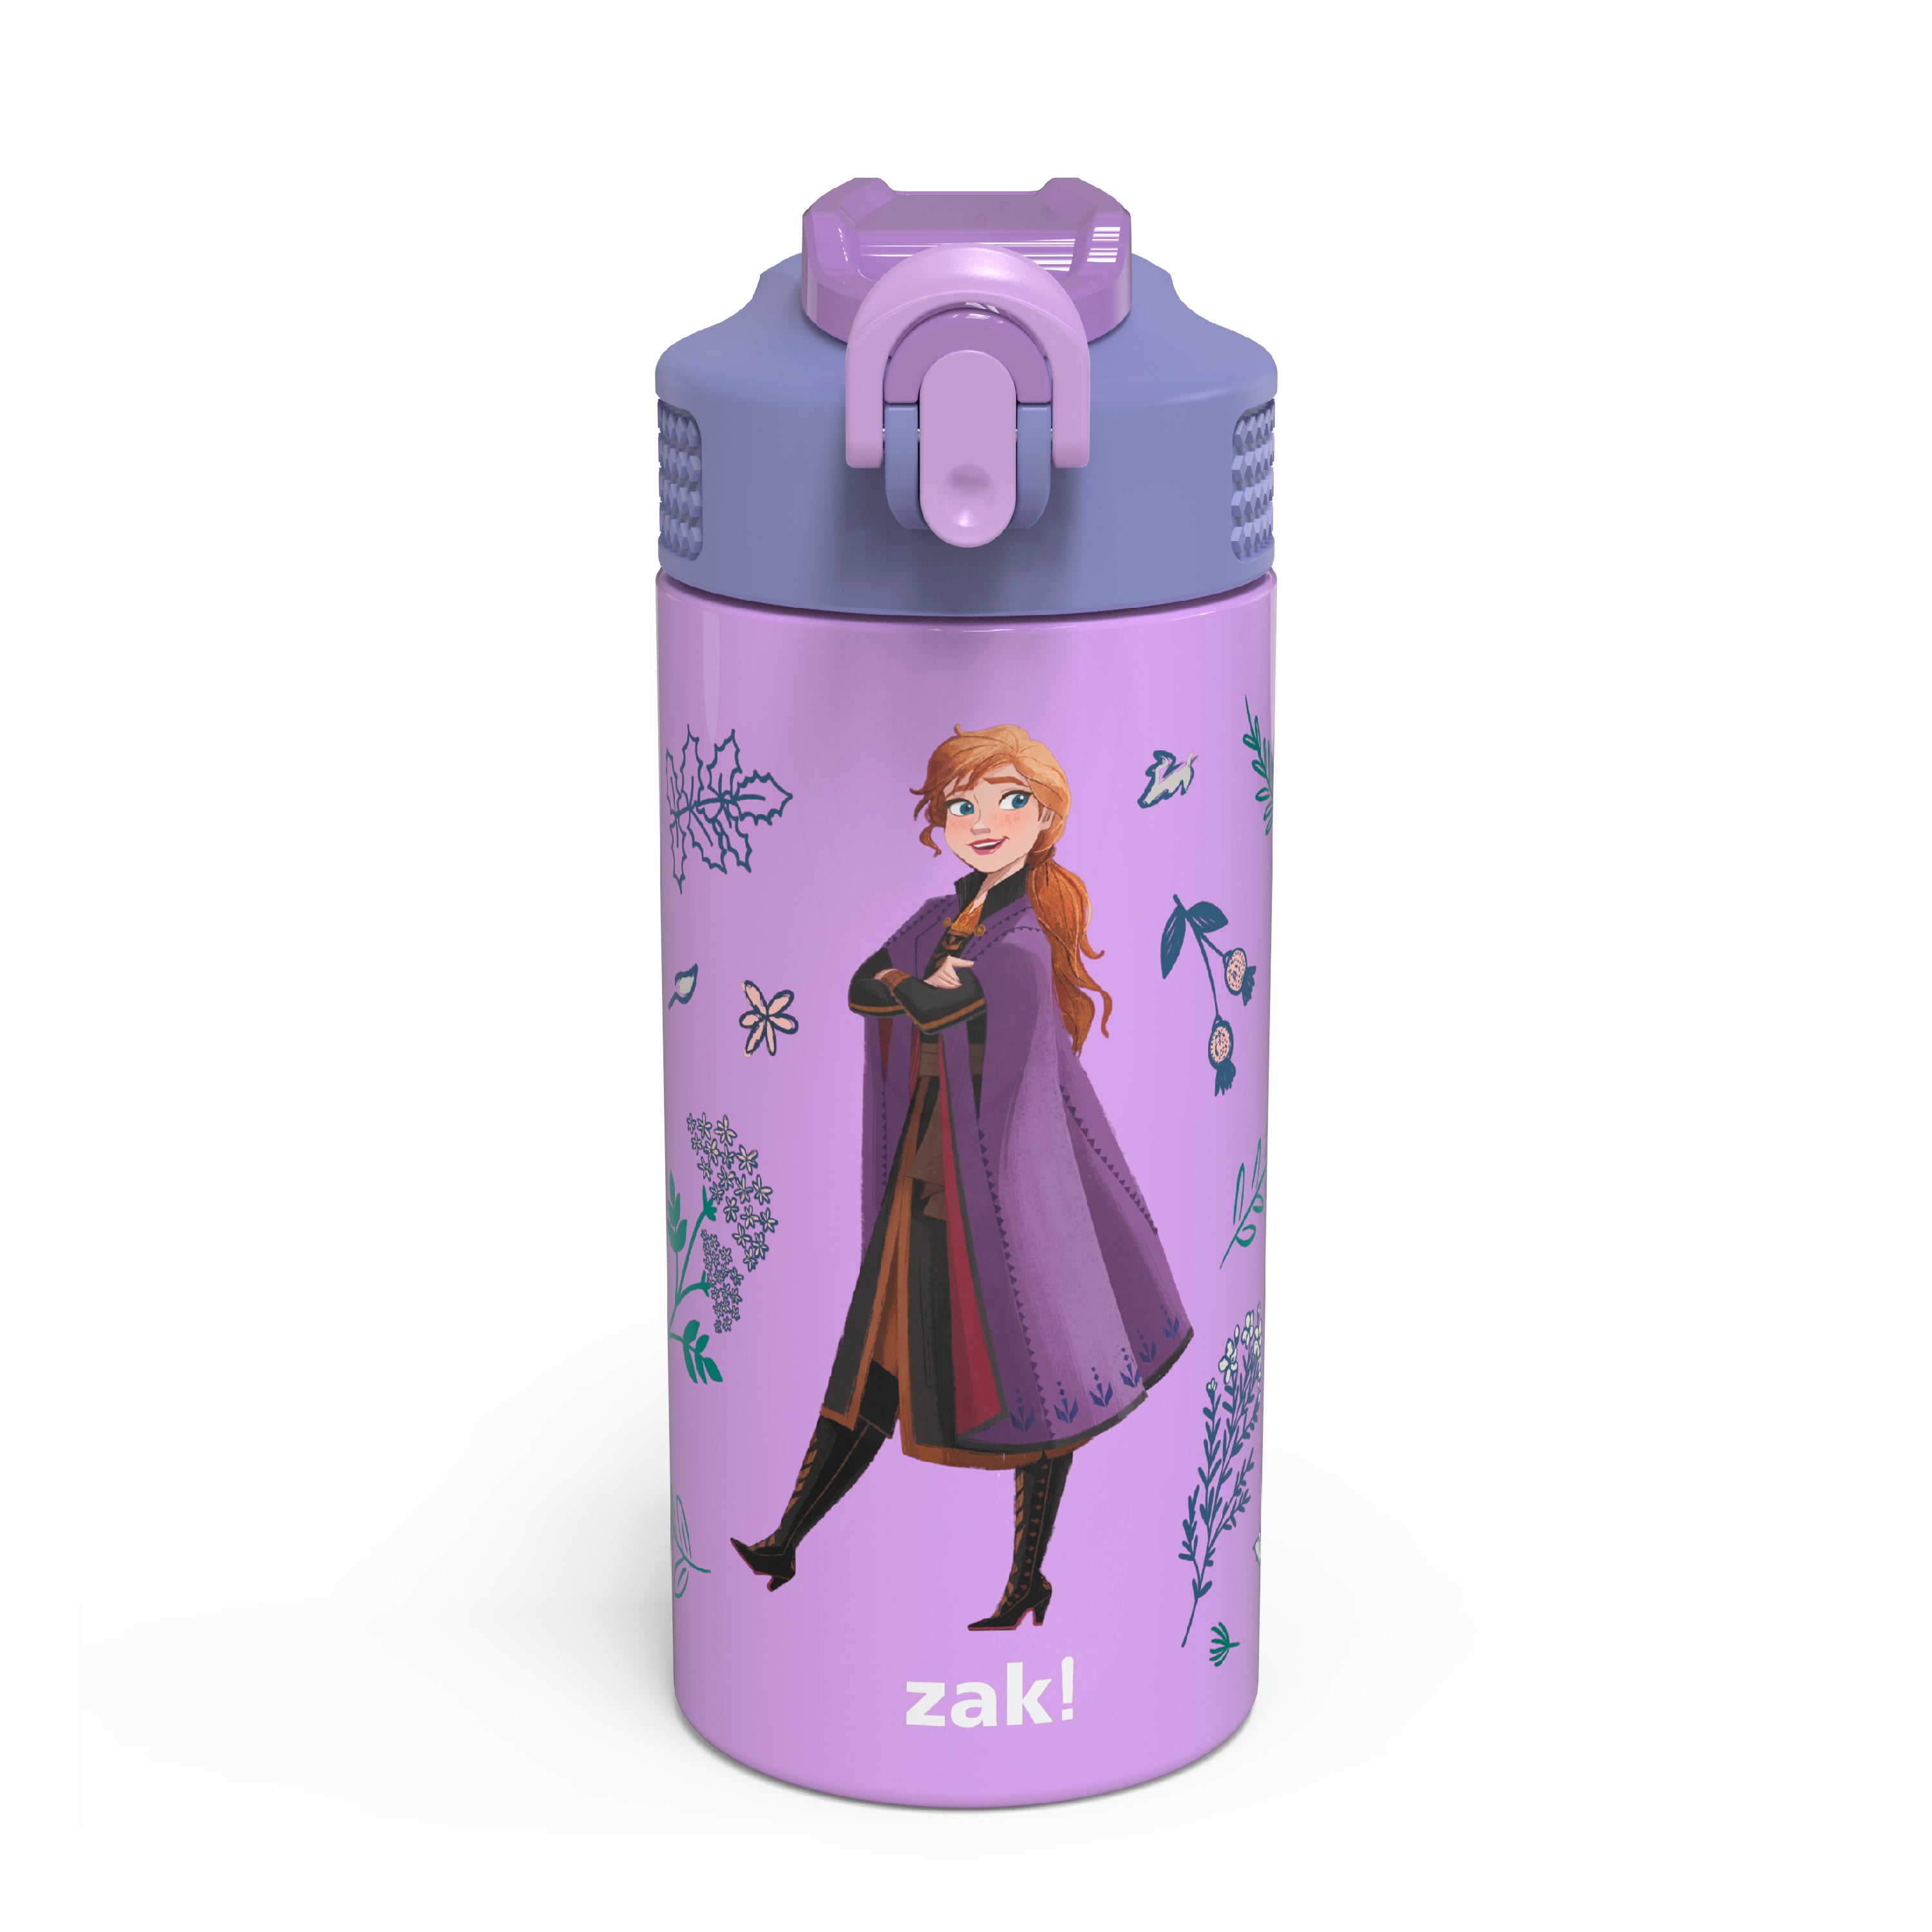 Disney Frozen Anna & Elsa Snowflakes 12 Oz. Water Bottle